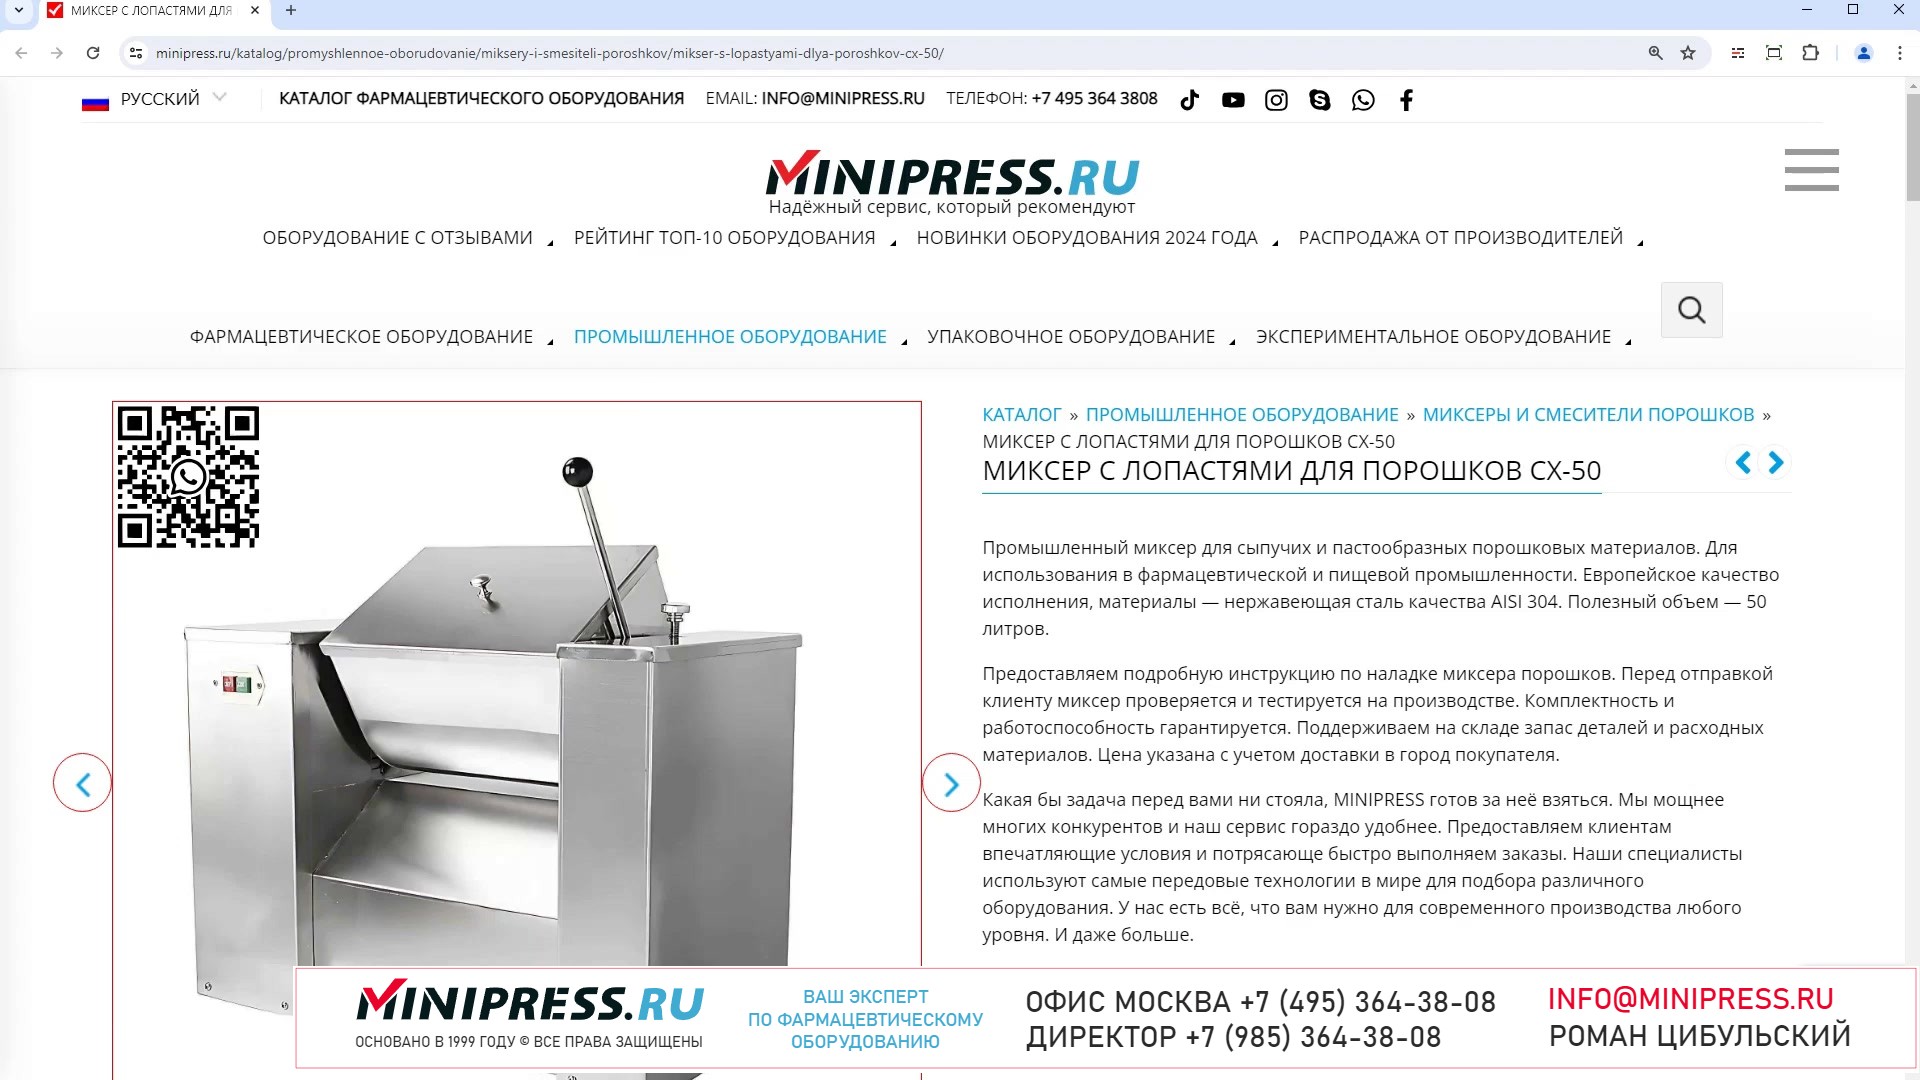 Minipress.ru Миксер с лопастями для порошков CX-50